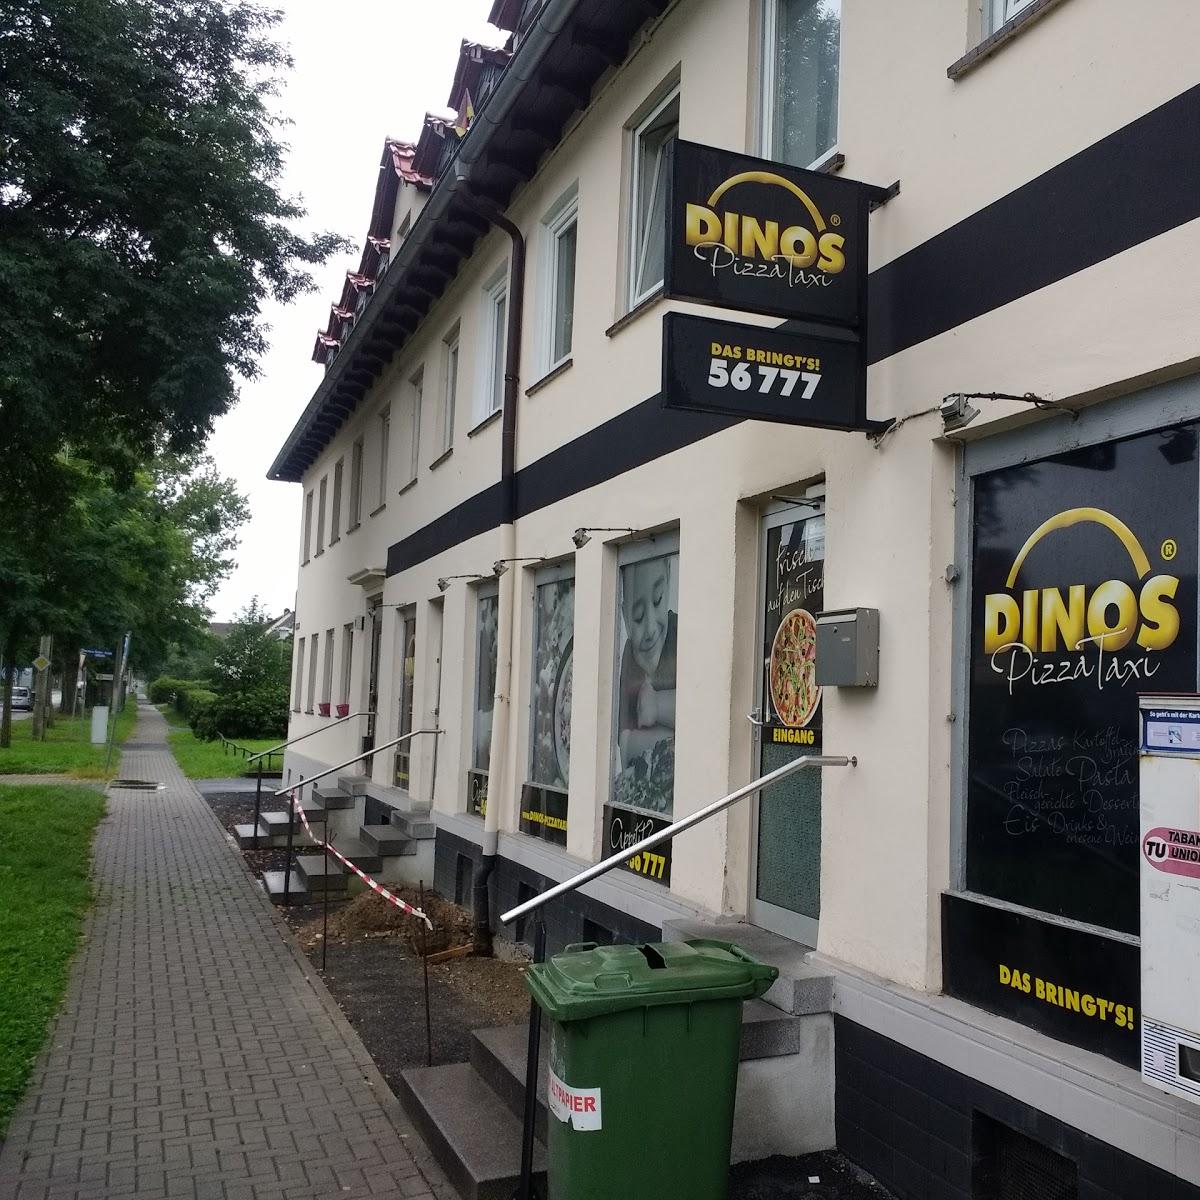 Restaurant "Dinos Pizza Taxi" in Kassel